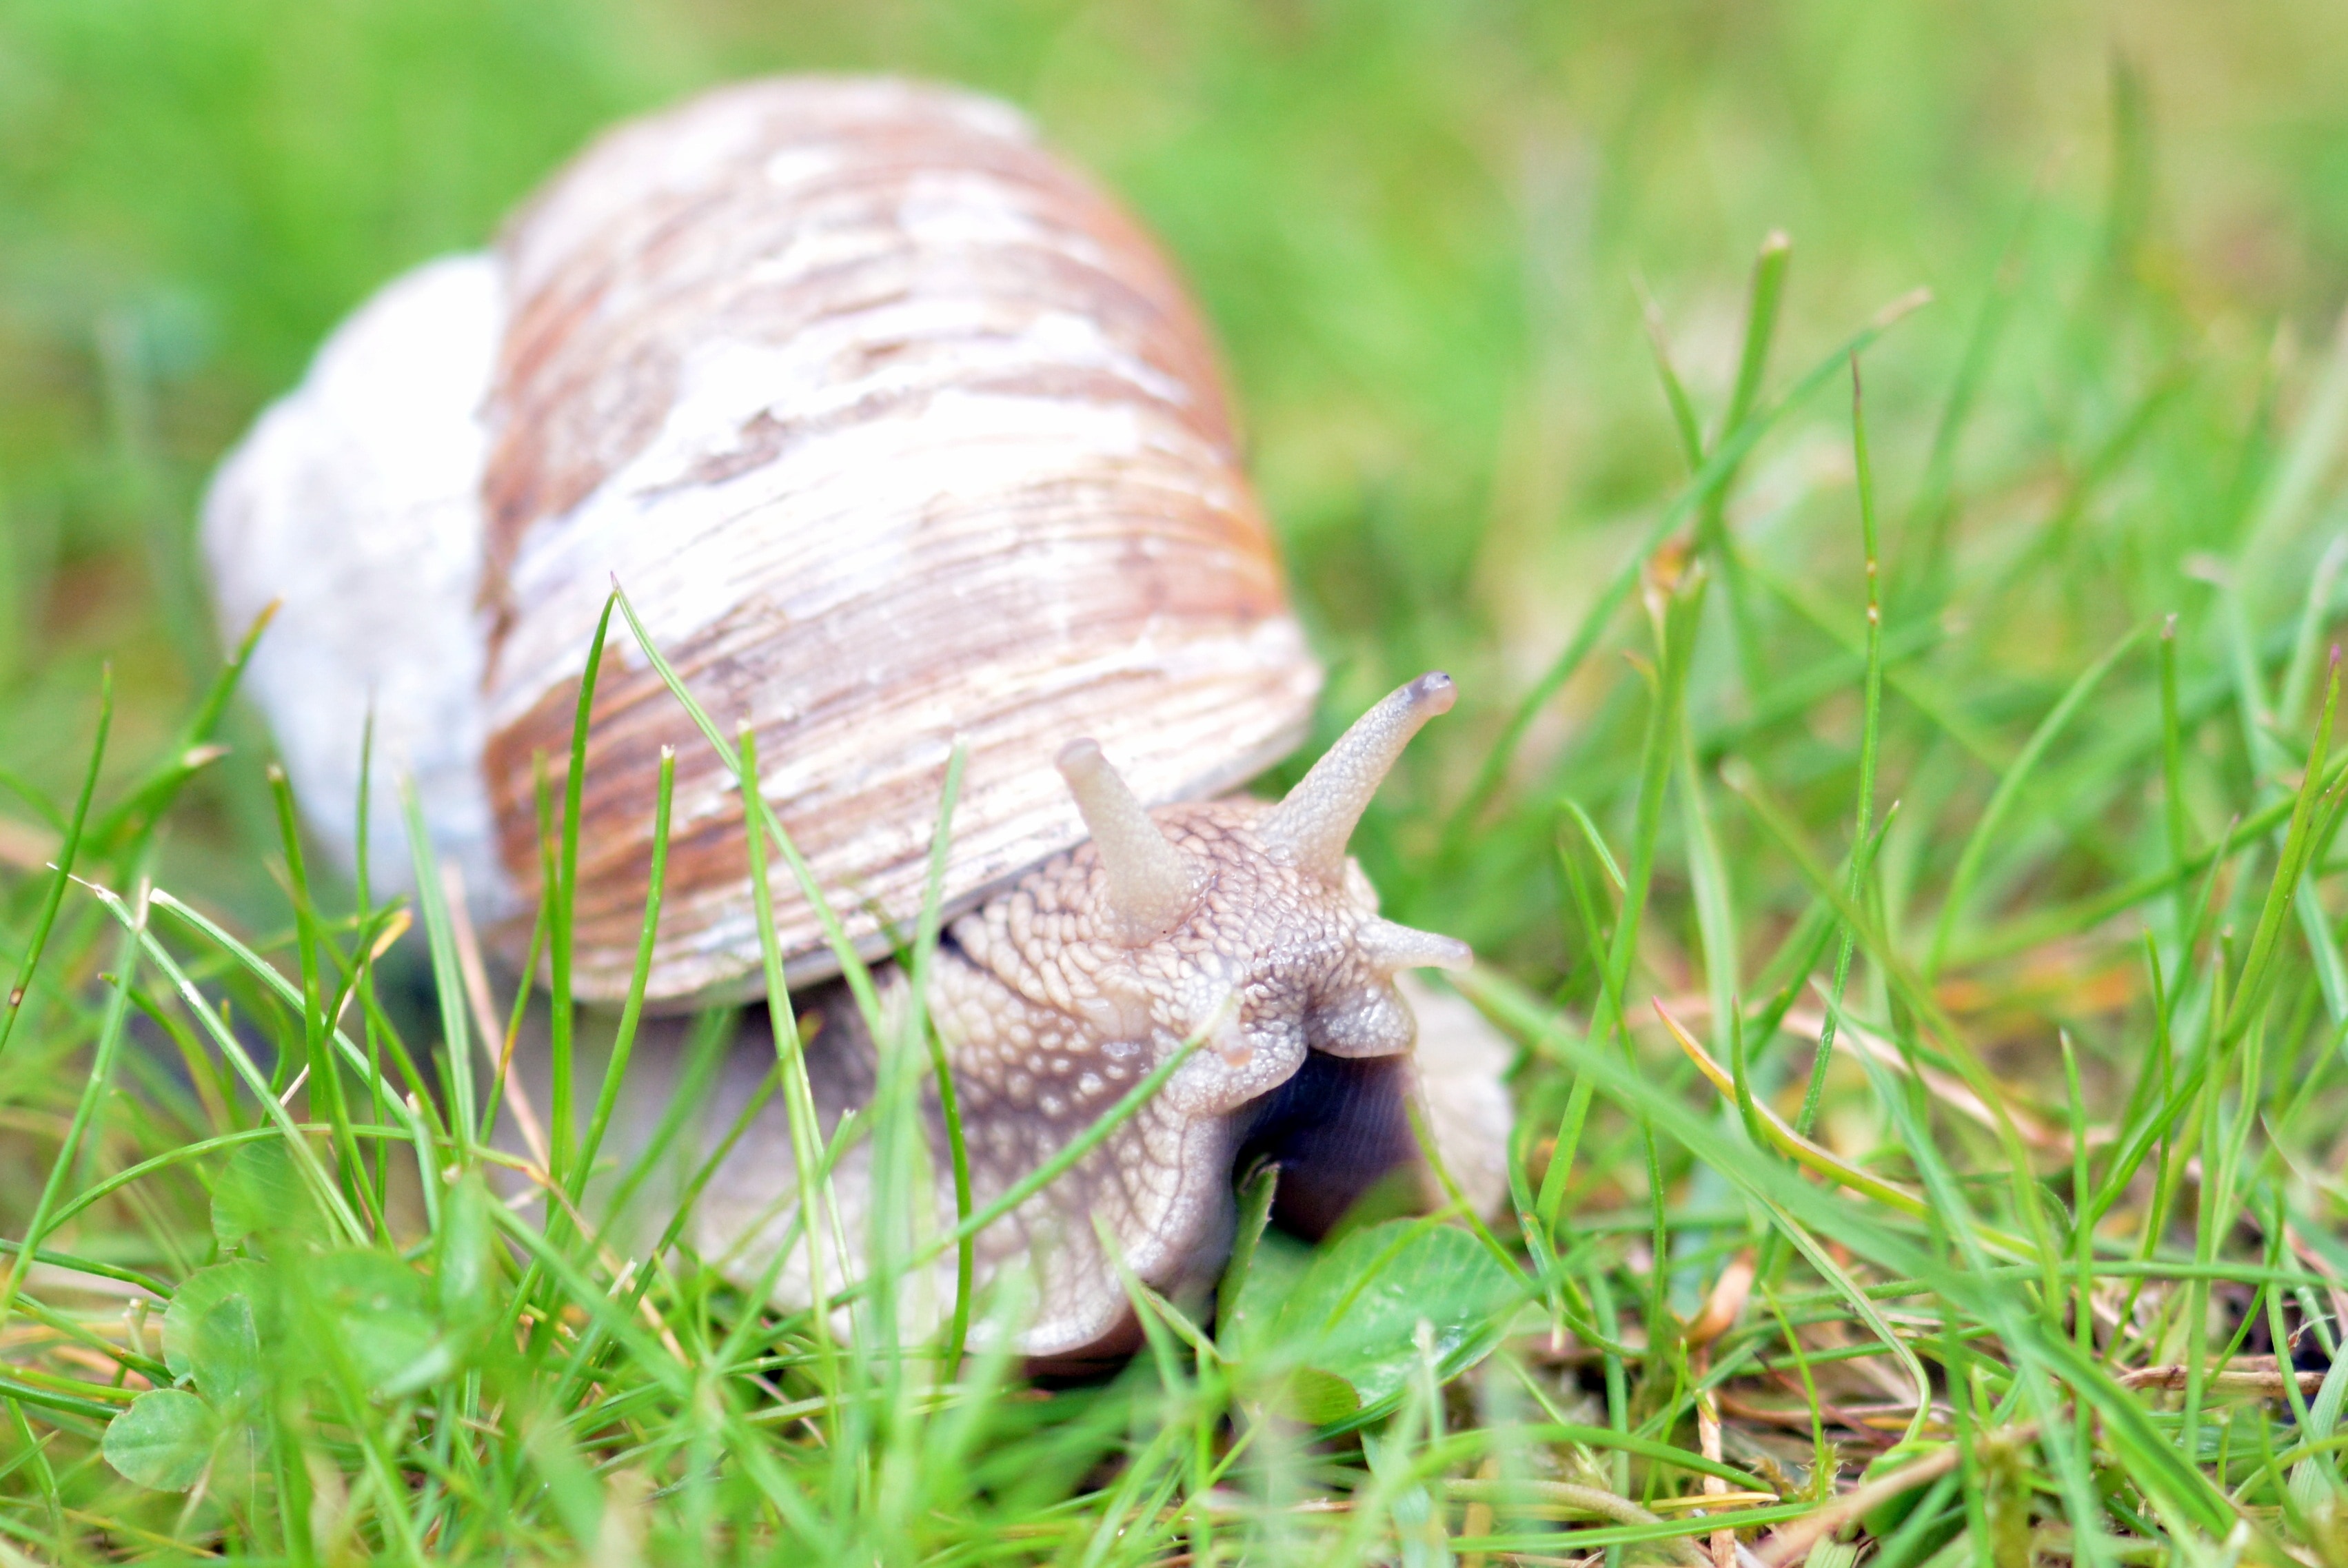 Snail, Shell, Nature, Animal, Mollusk, grass, one animal